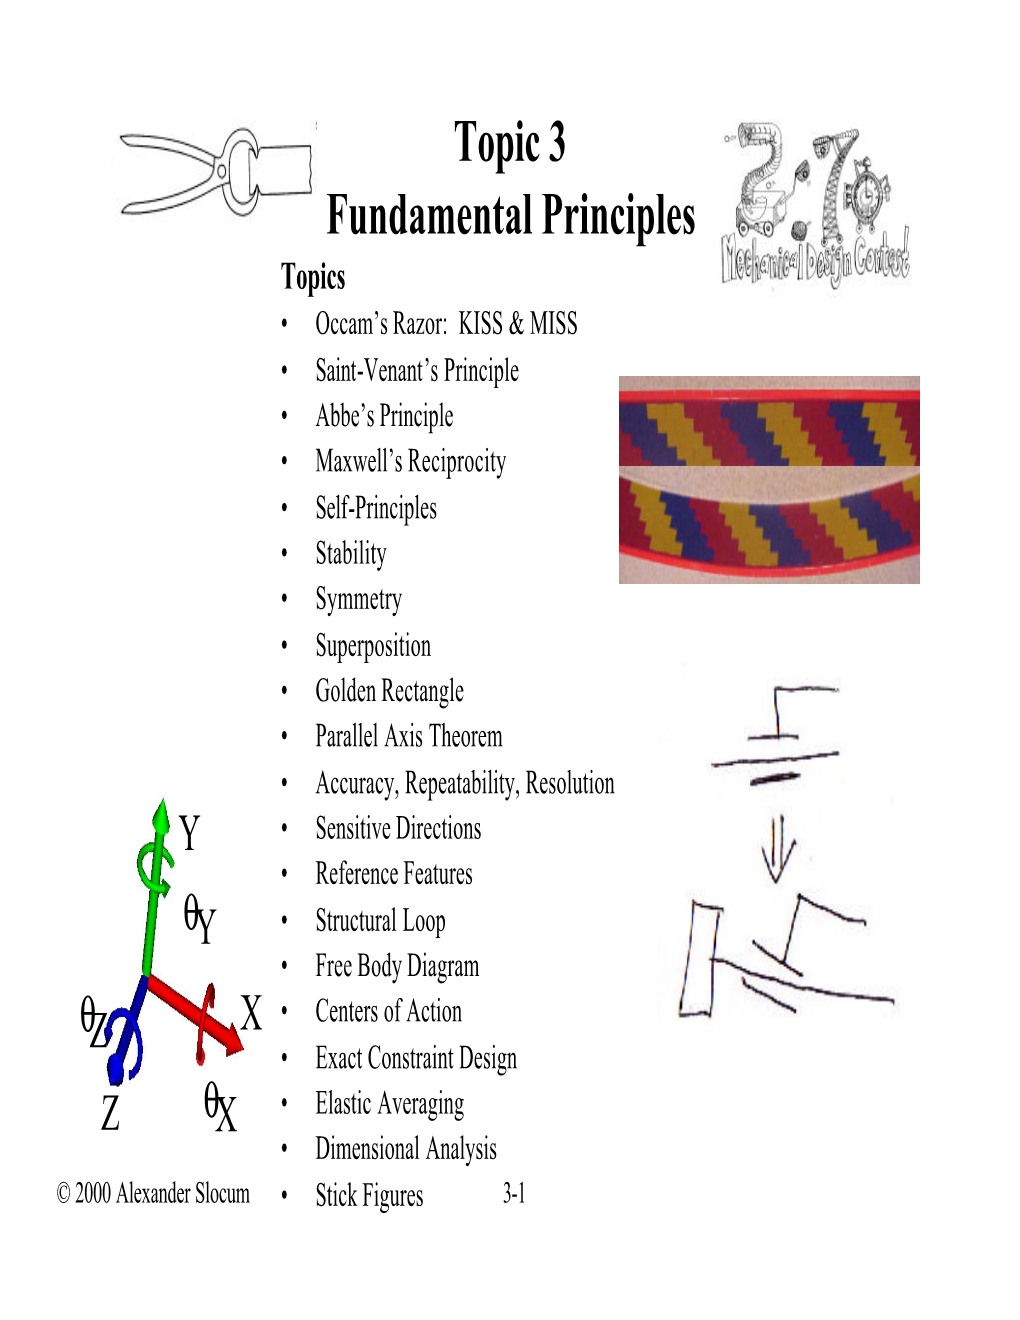 Topic 3 Fundamental Principles